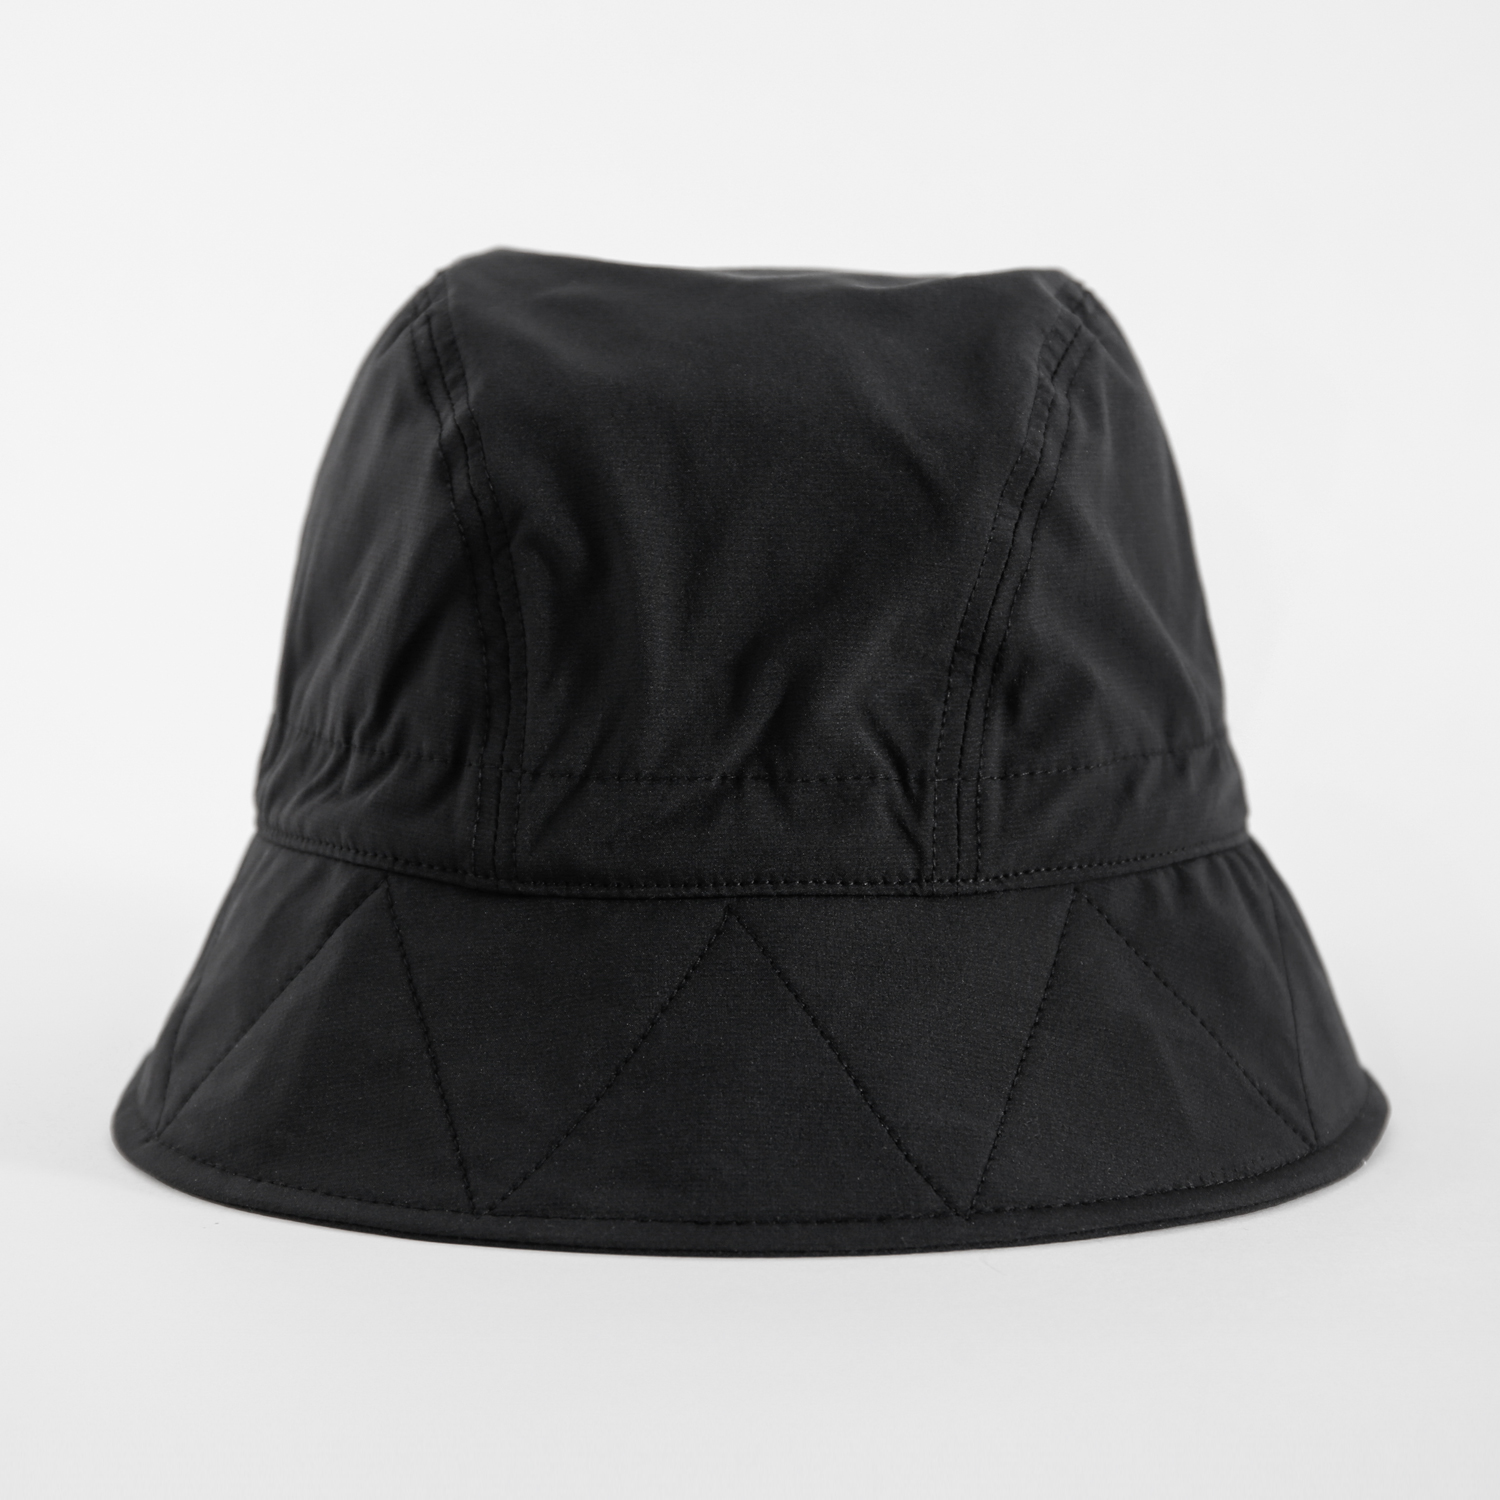 CAYL AquaX Hat / Black